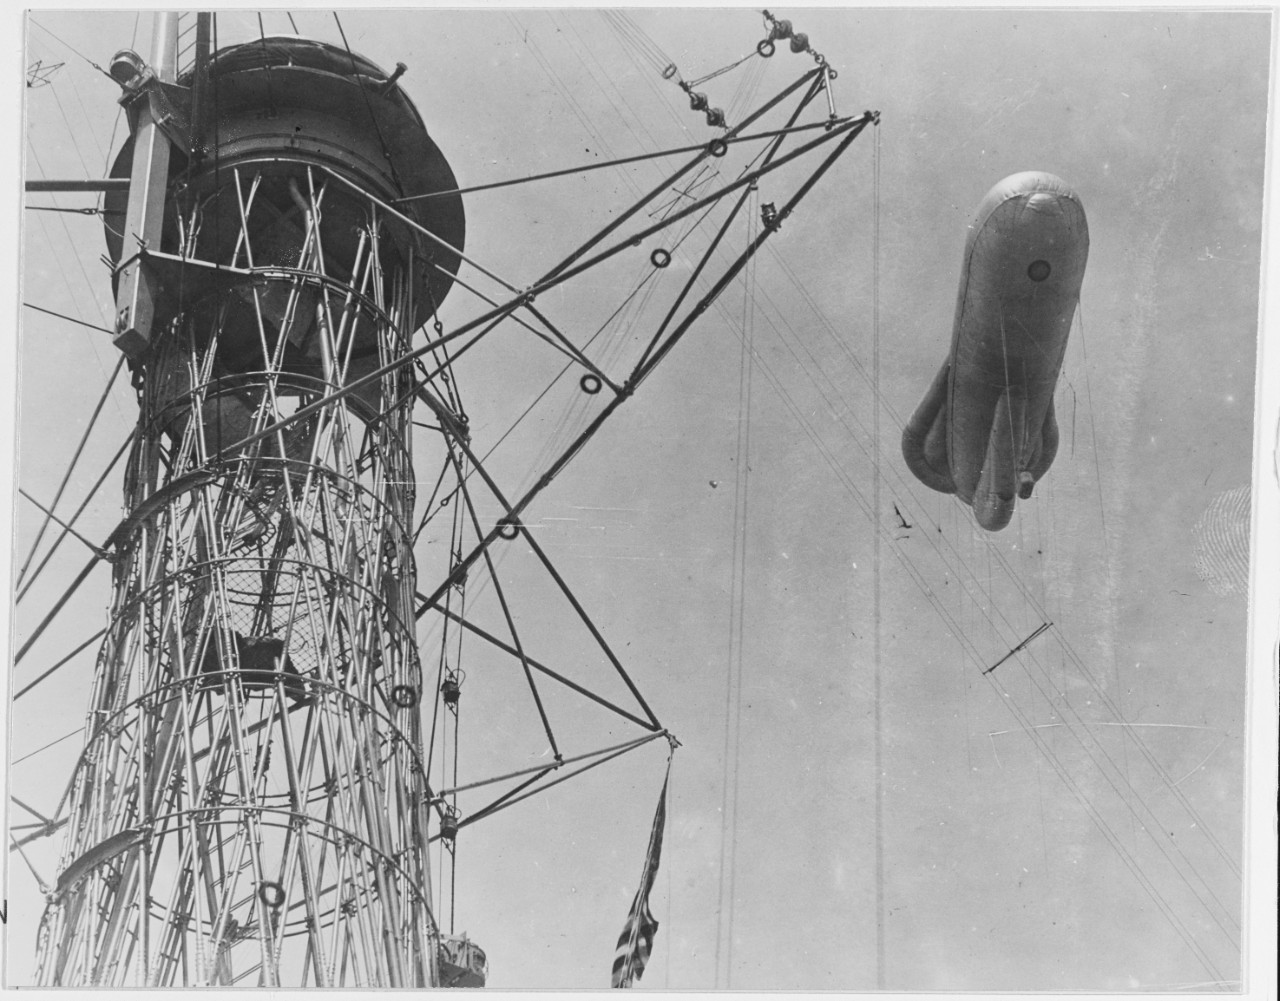 Kite balloon tethered to a battleship